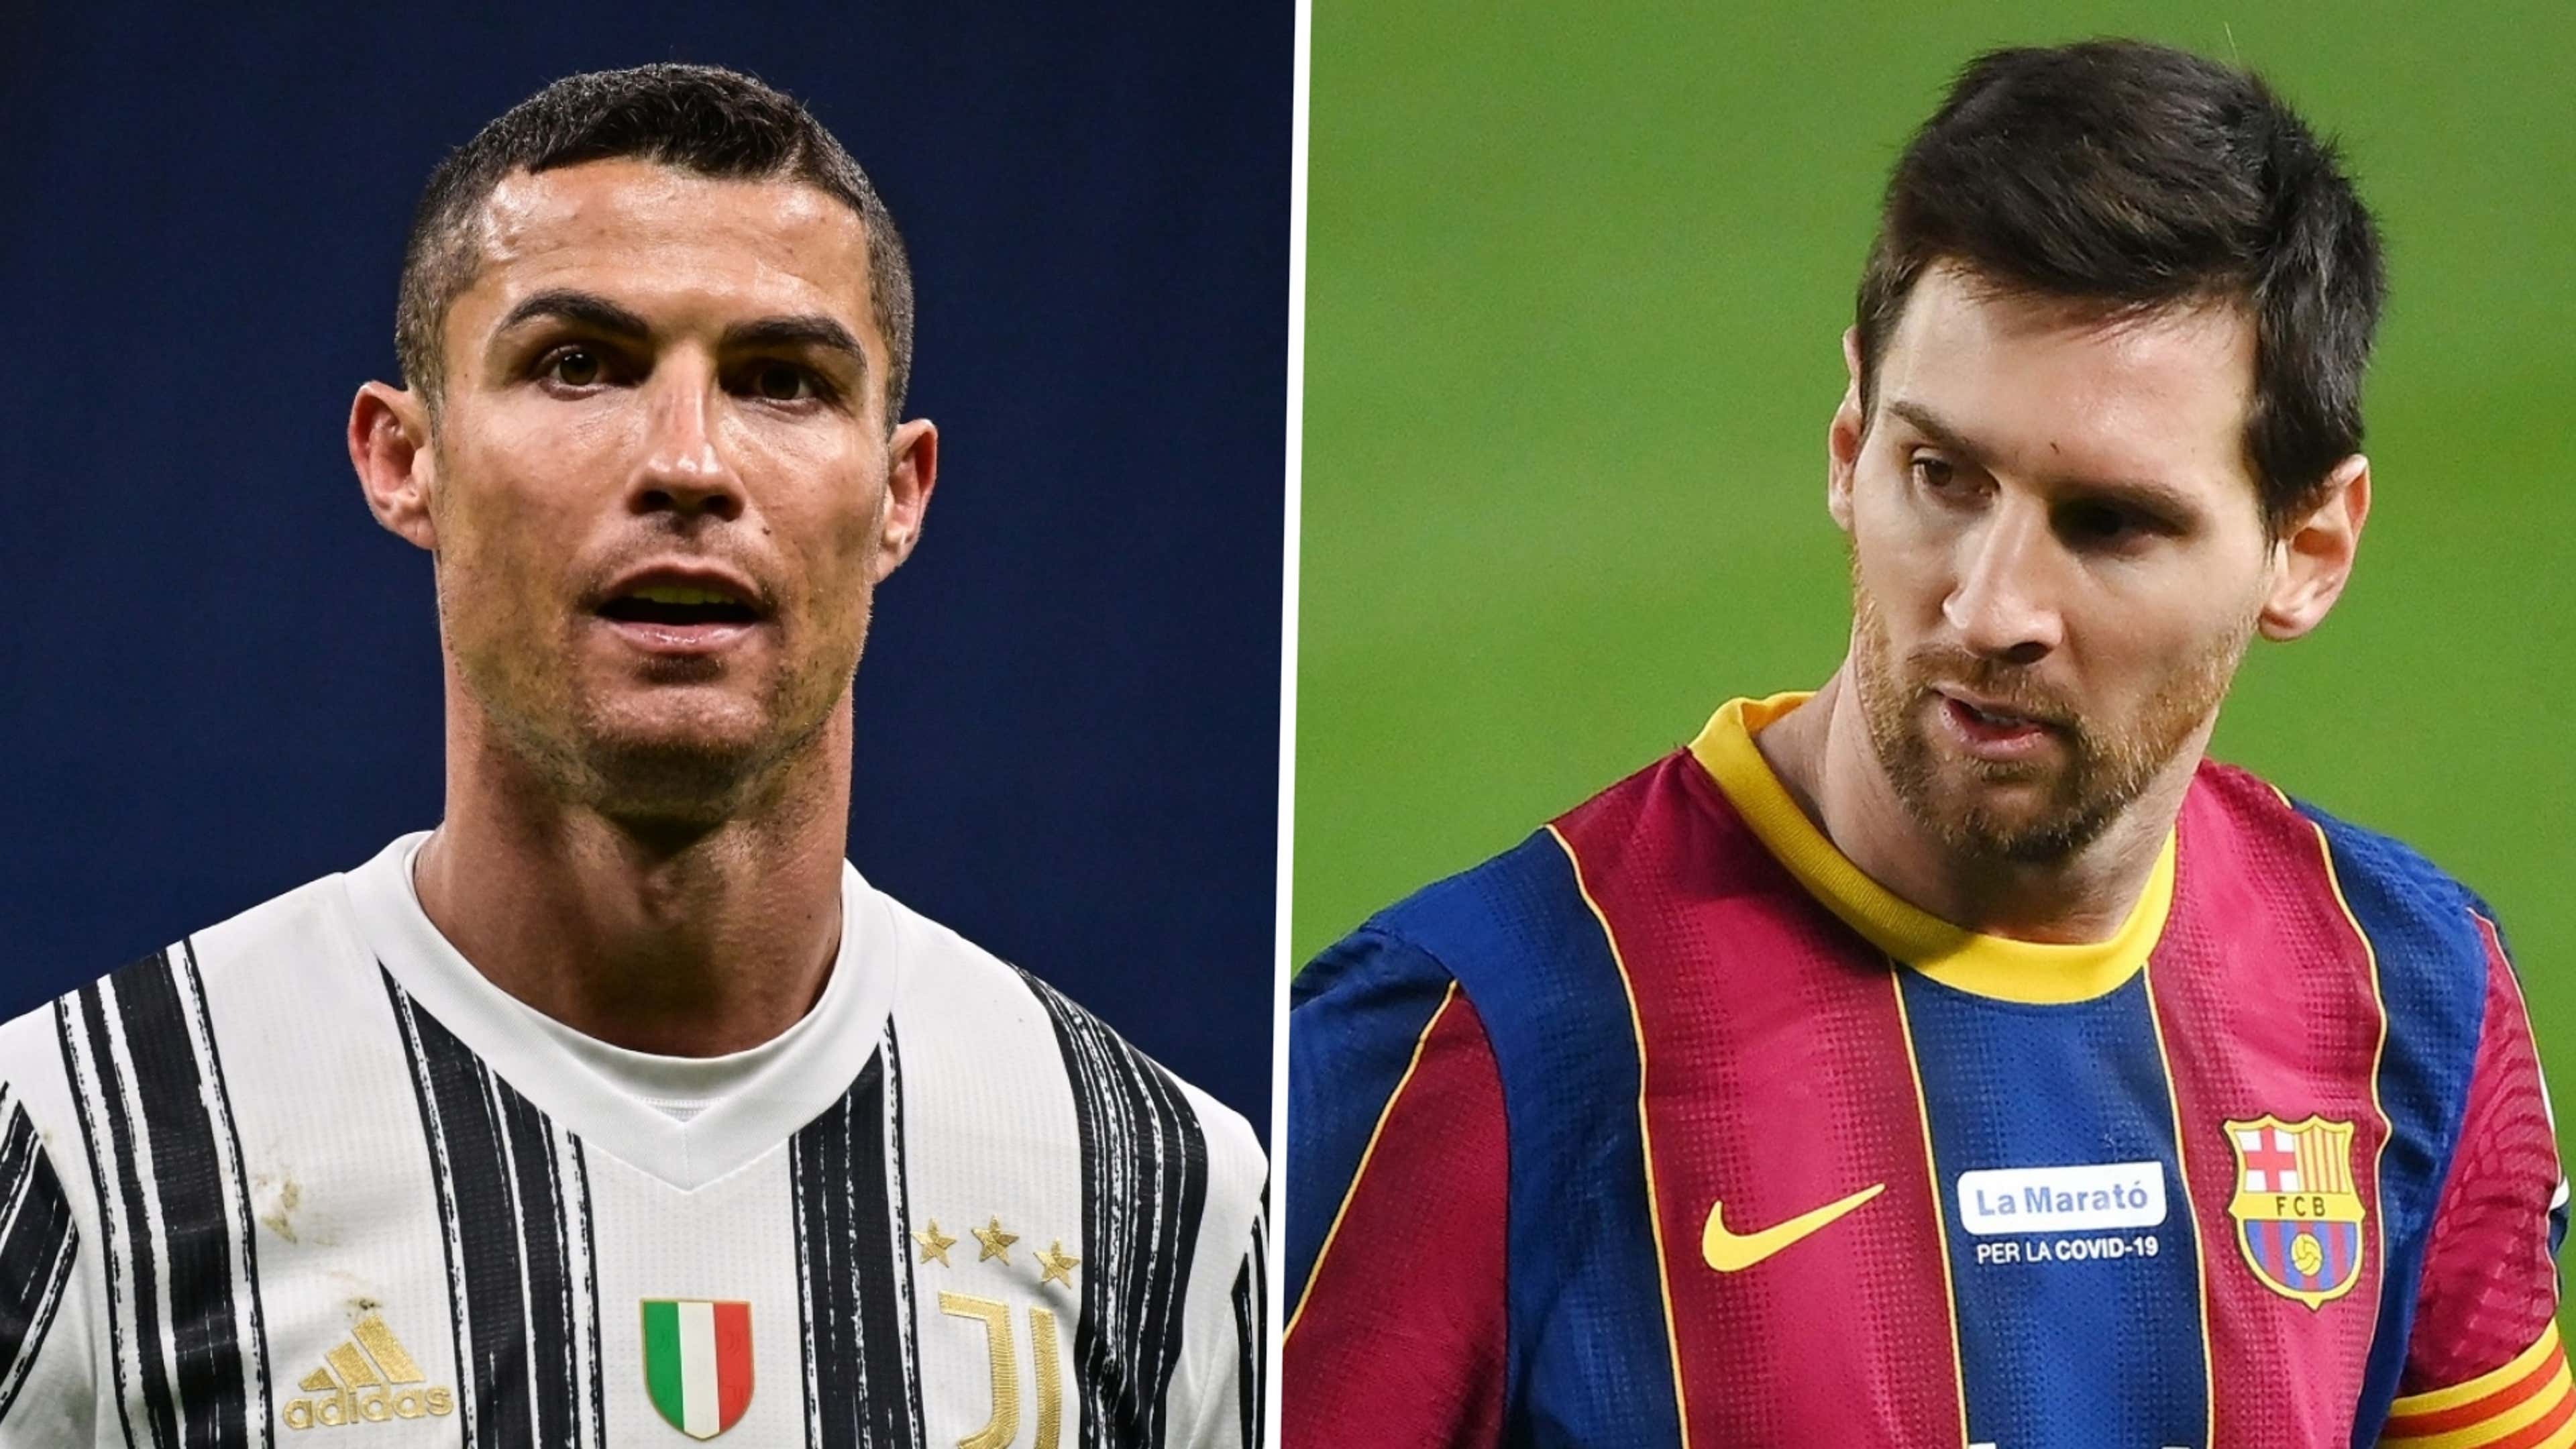 Ronaldo or Messi - who has scored more goals?